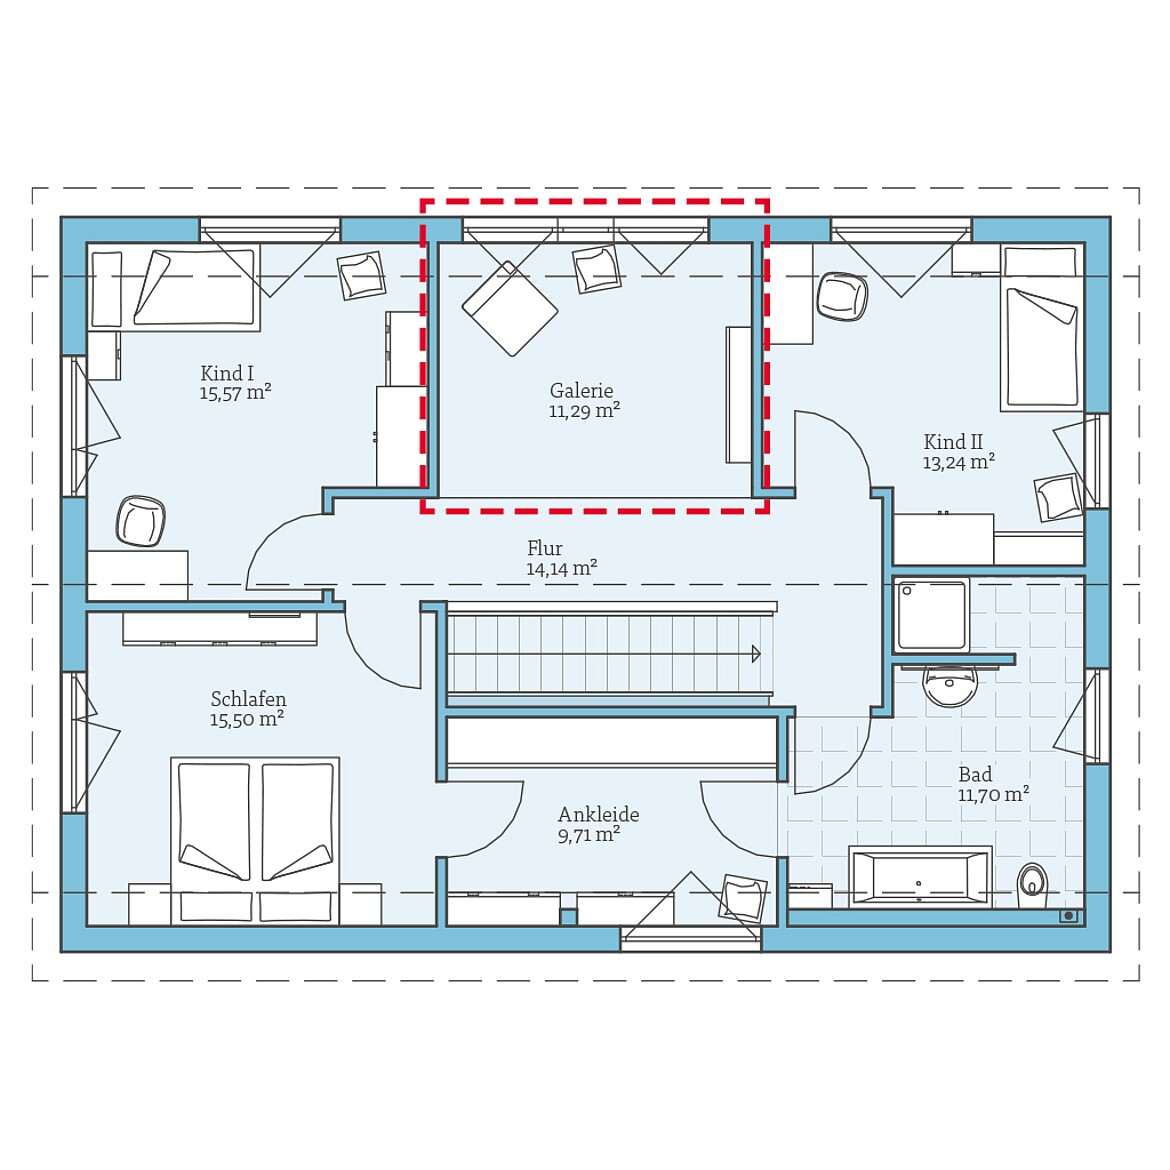 Prefabricated house Variant 25-183: Top floor plan option